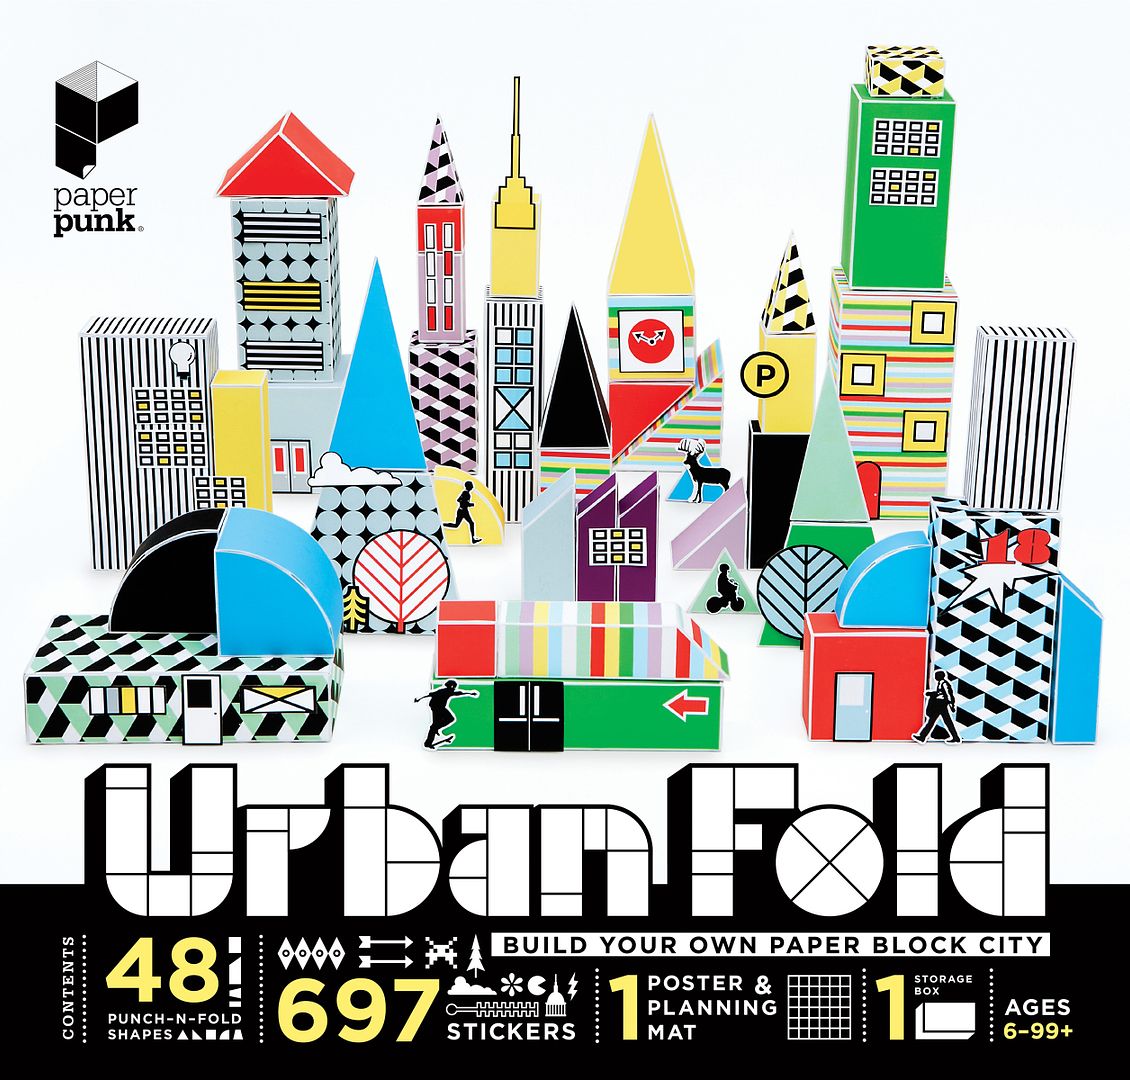 Paper Punk Urban Fold paper block city for kids